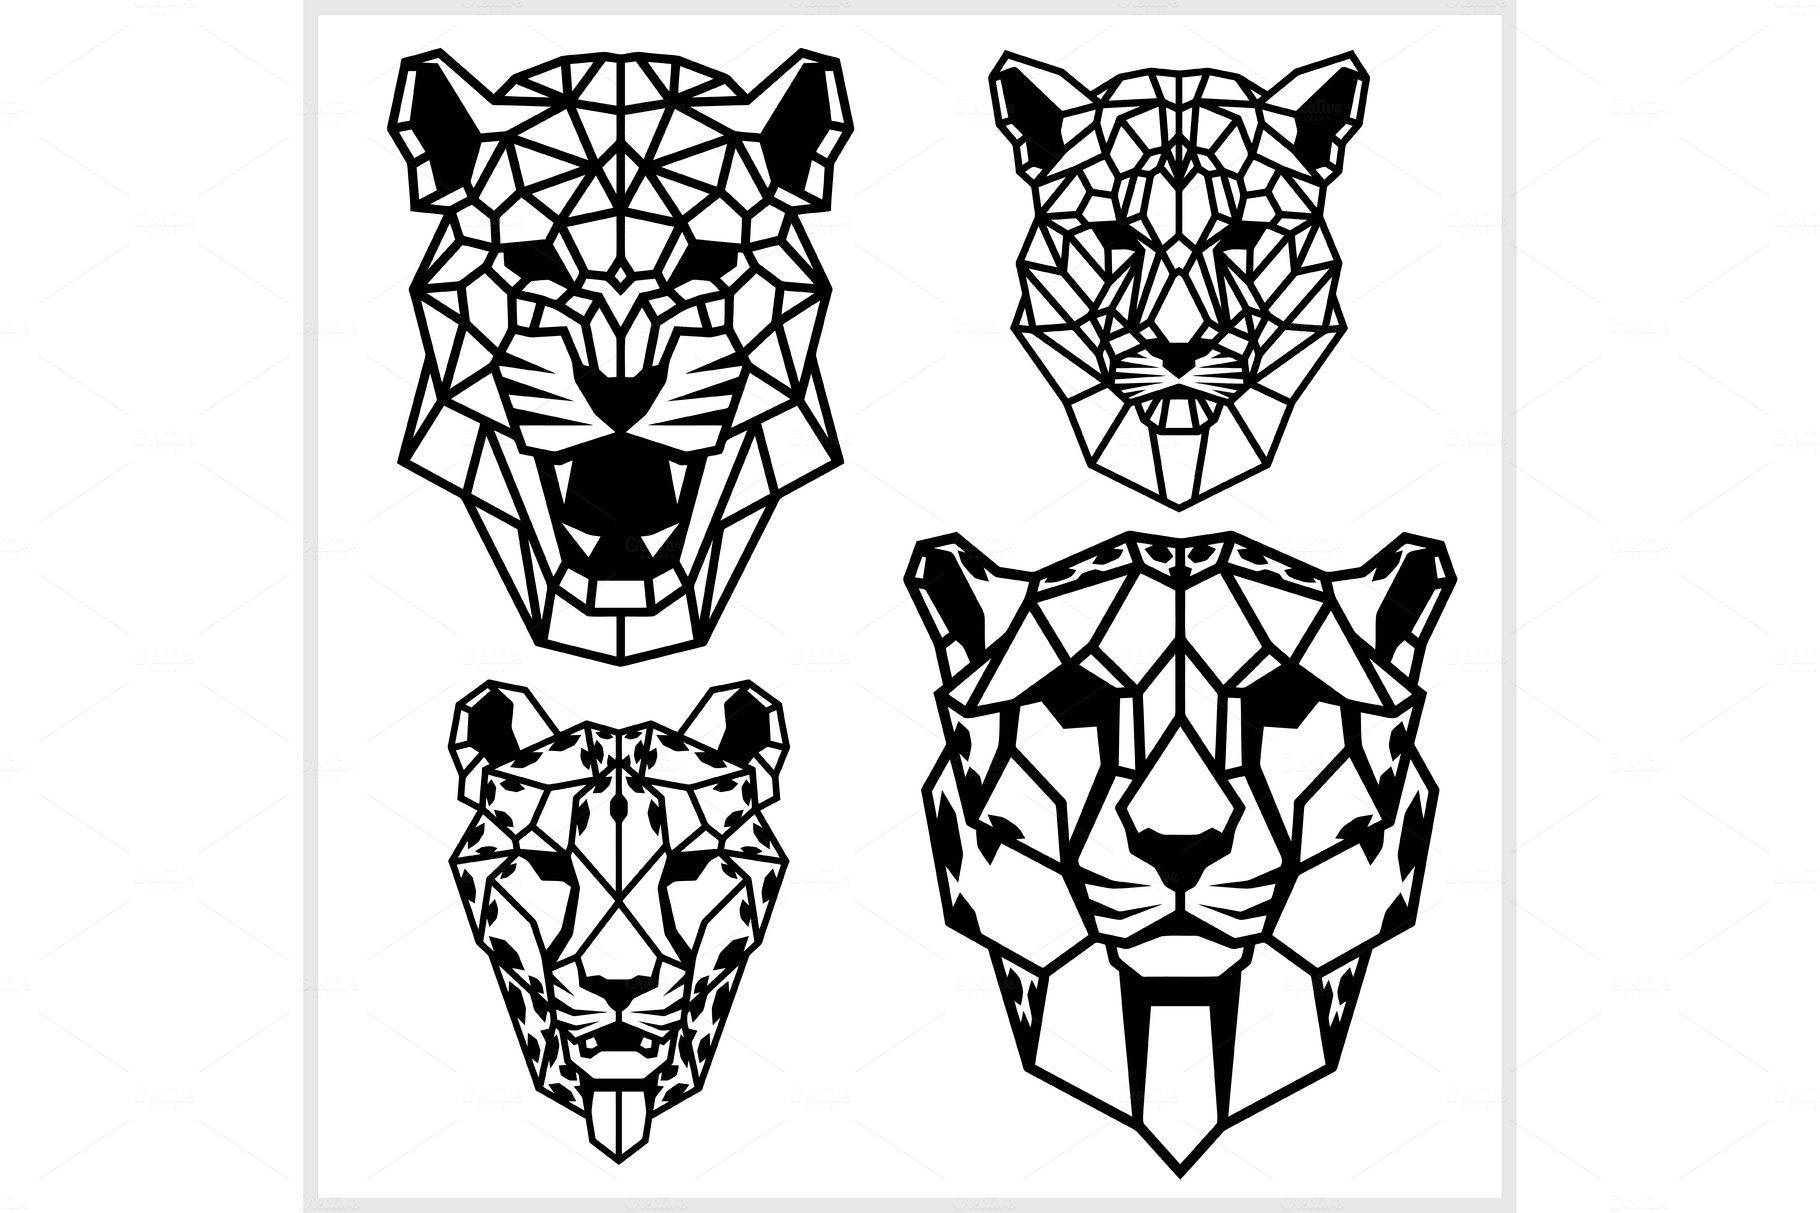 Cheetah and panter - animal heads cover image.